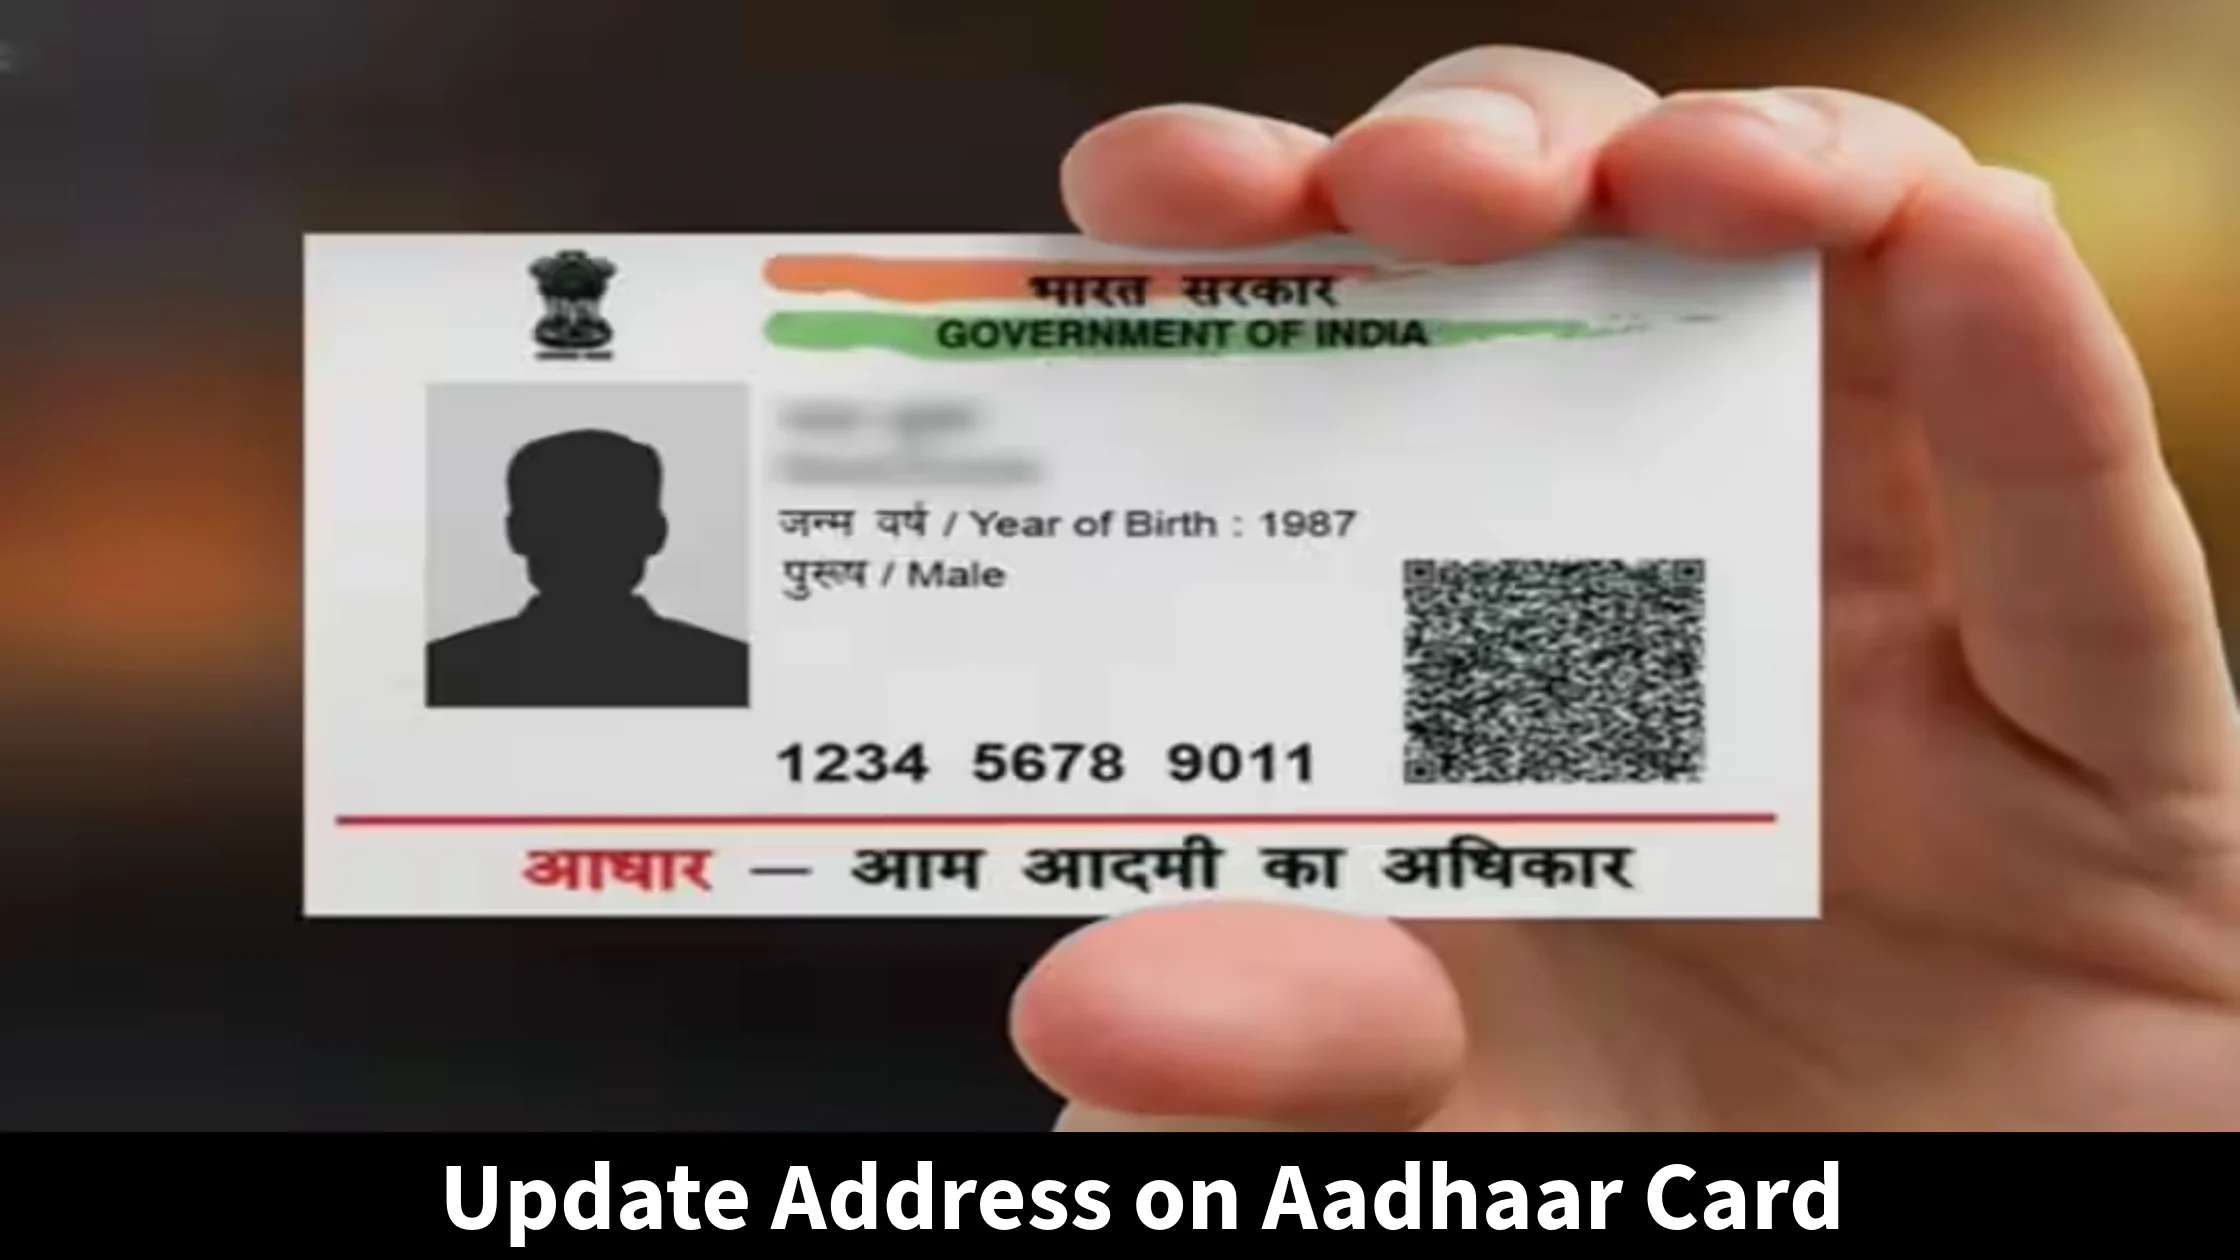 Update Address on Aadhaar Card